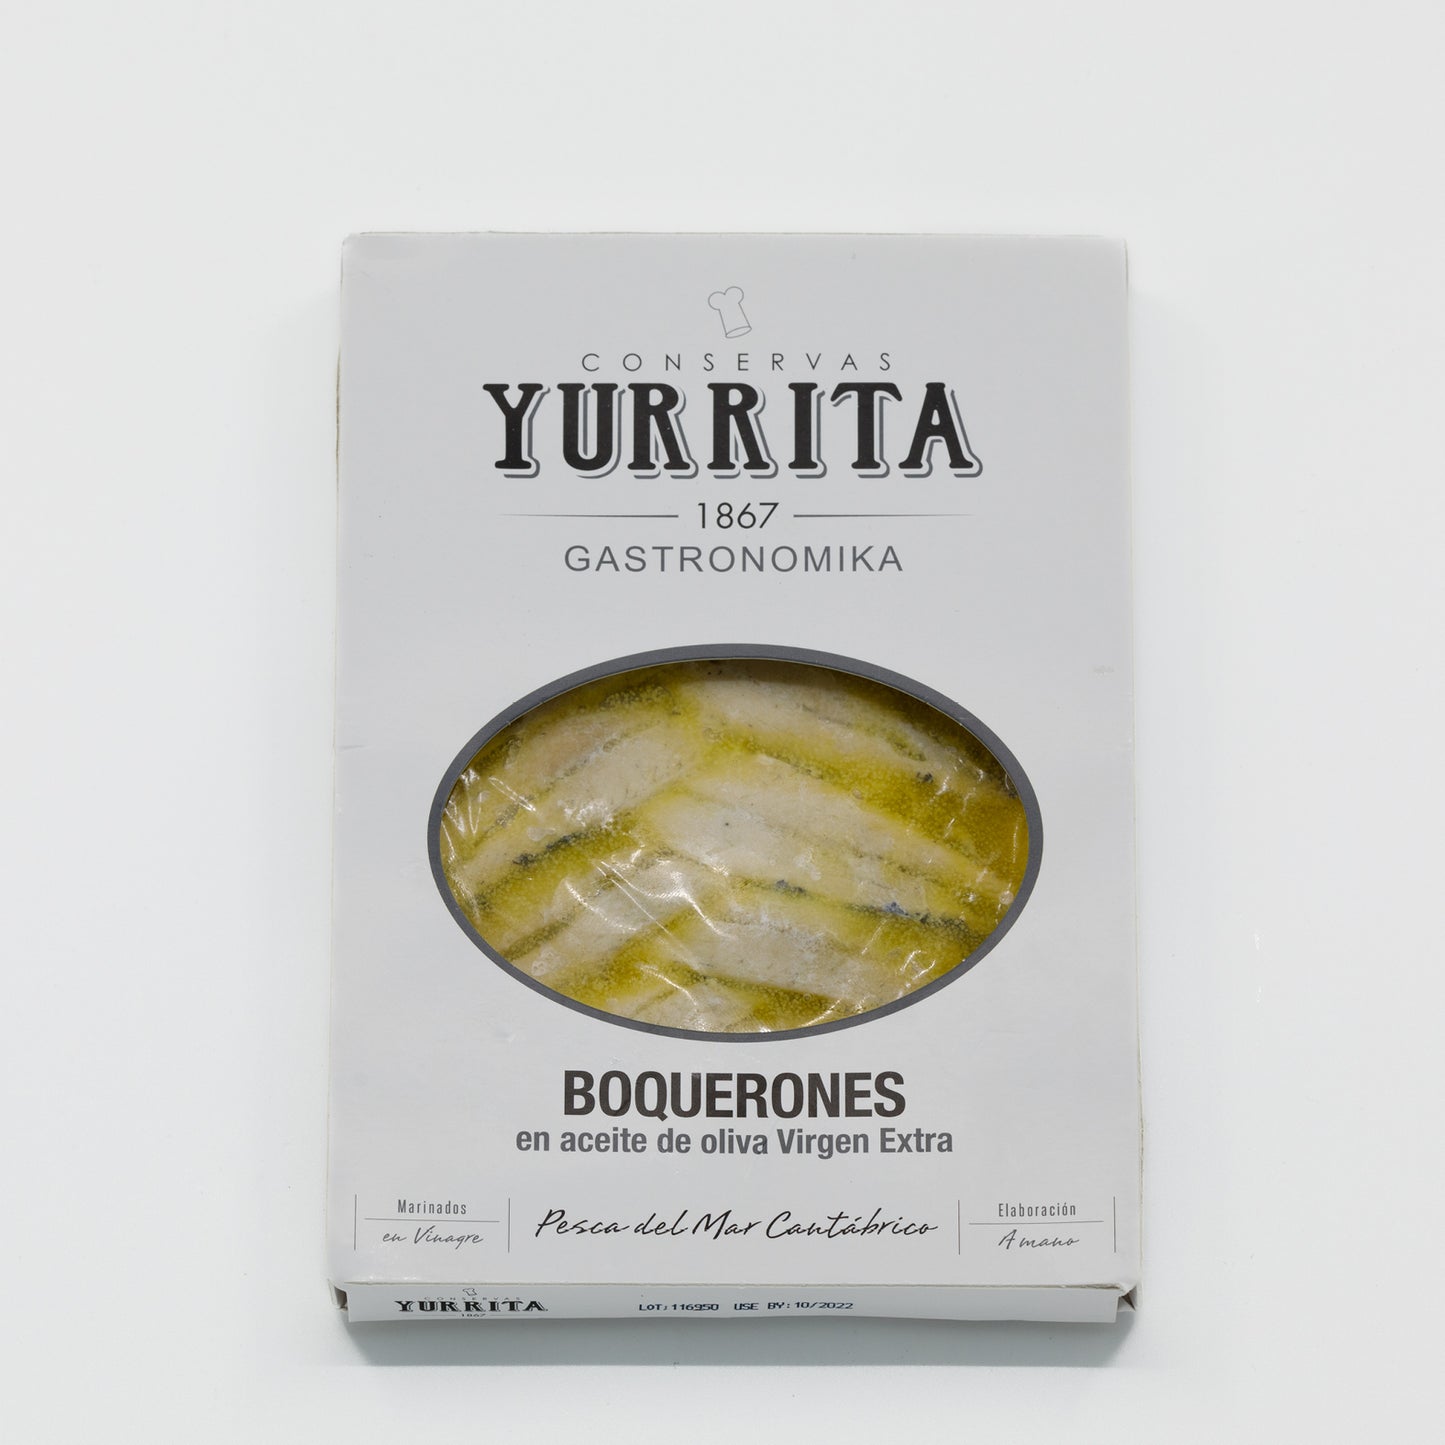 Yurrita Boqueriones White Anchovies